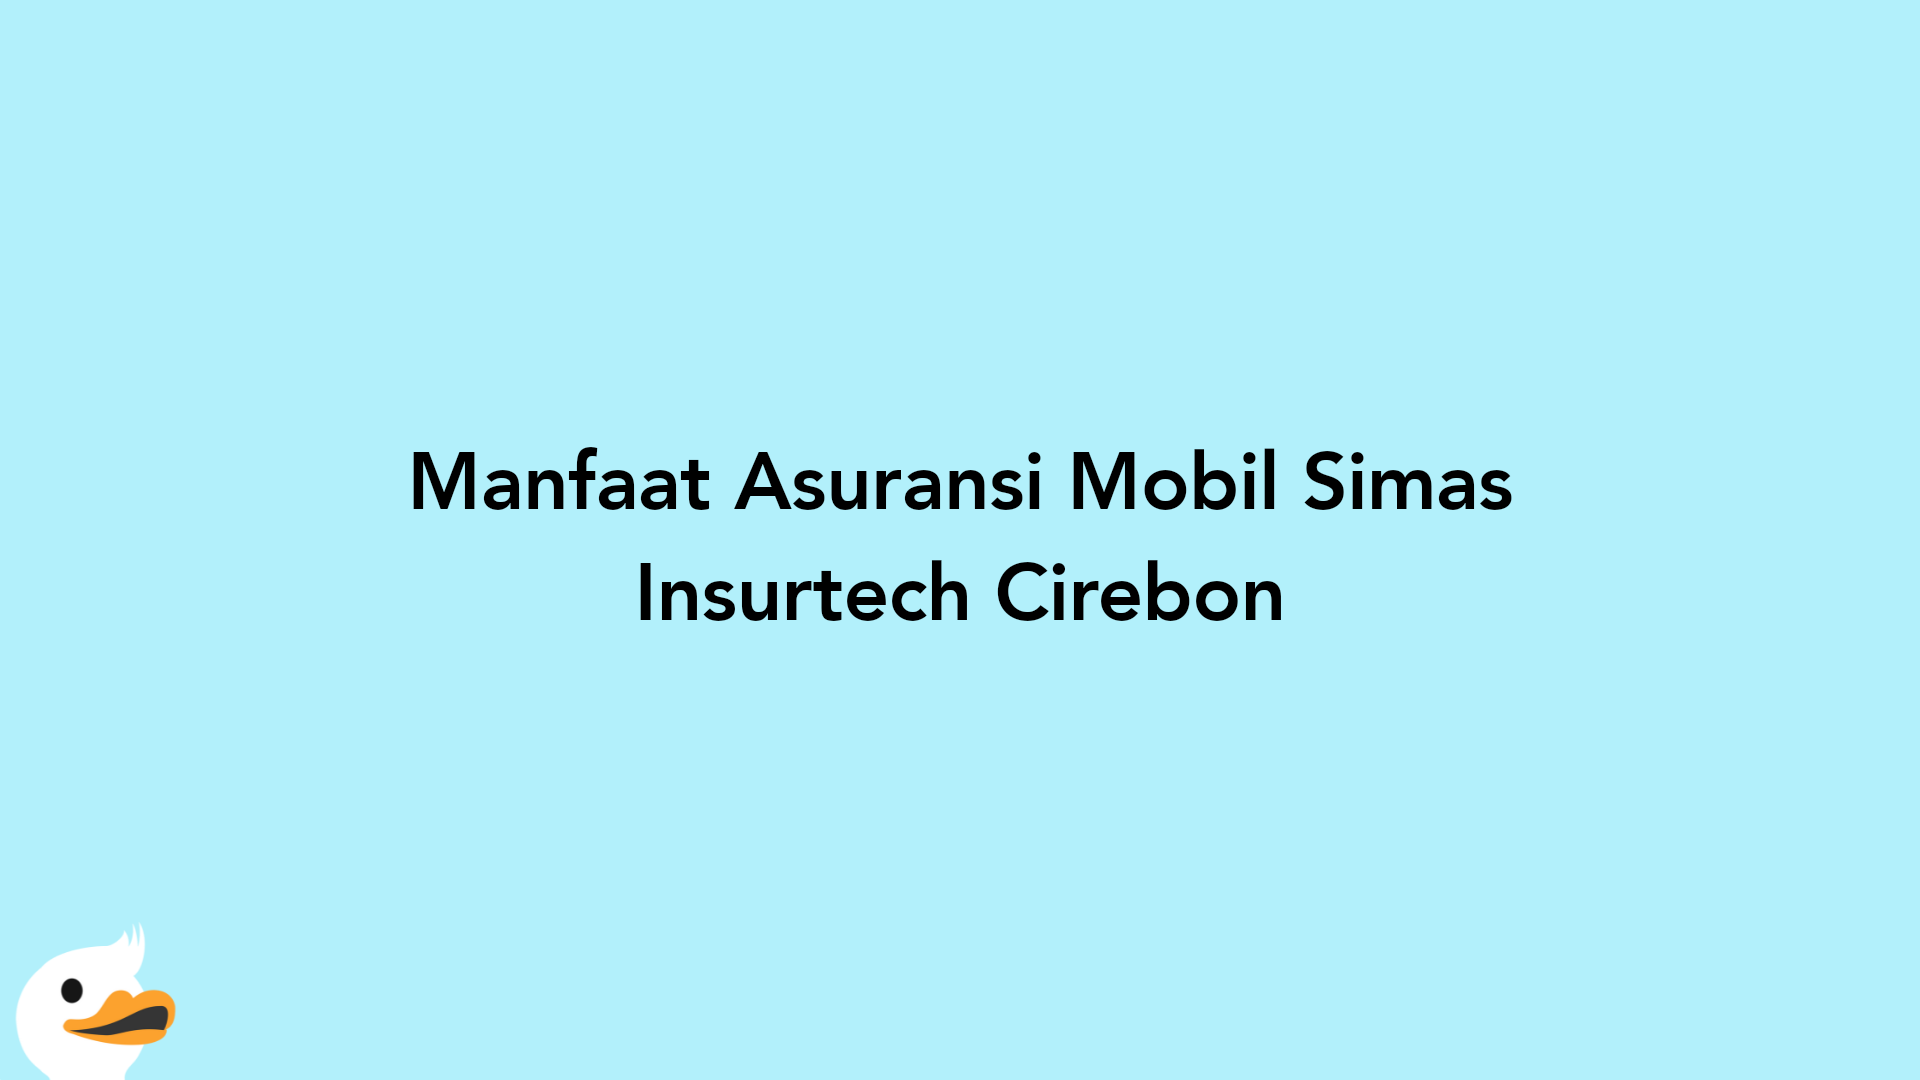 Manfaat Asuransi Mobil Simas Insurtech Cirebon